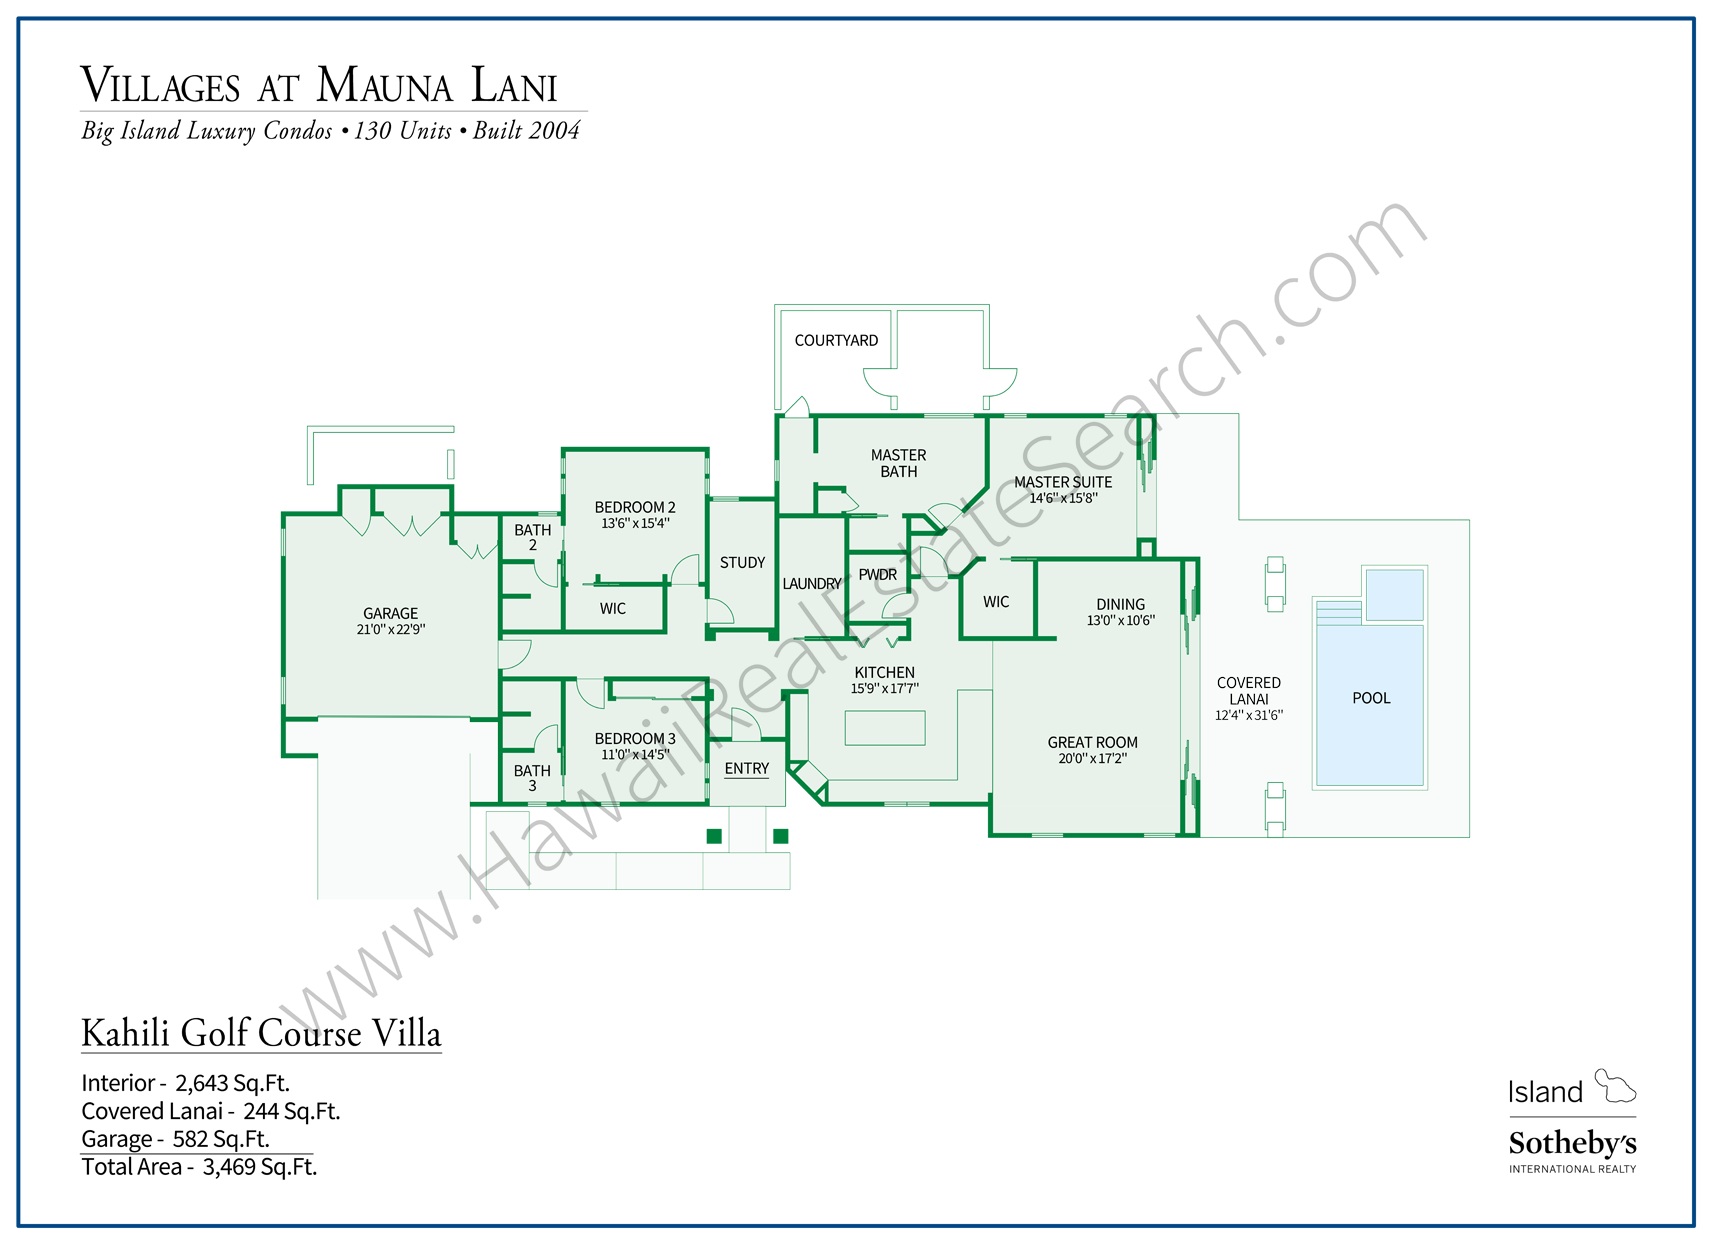 Villages at Mauna Lani Floor Plan 2